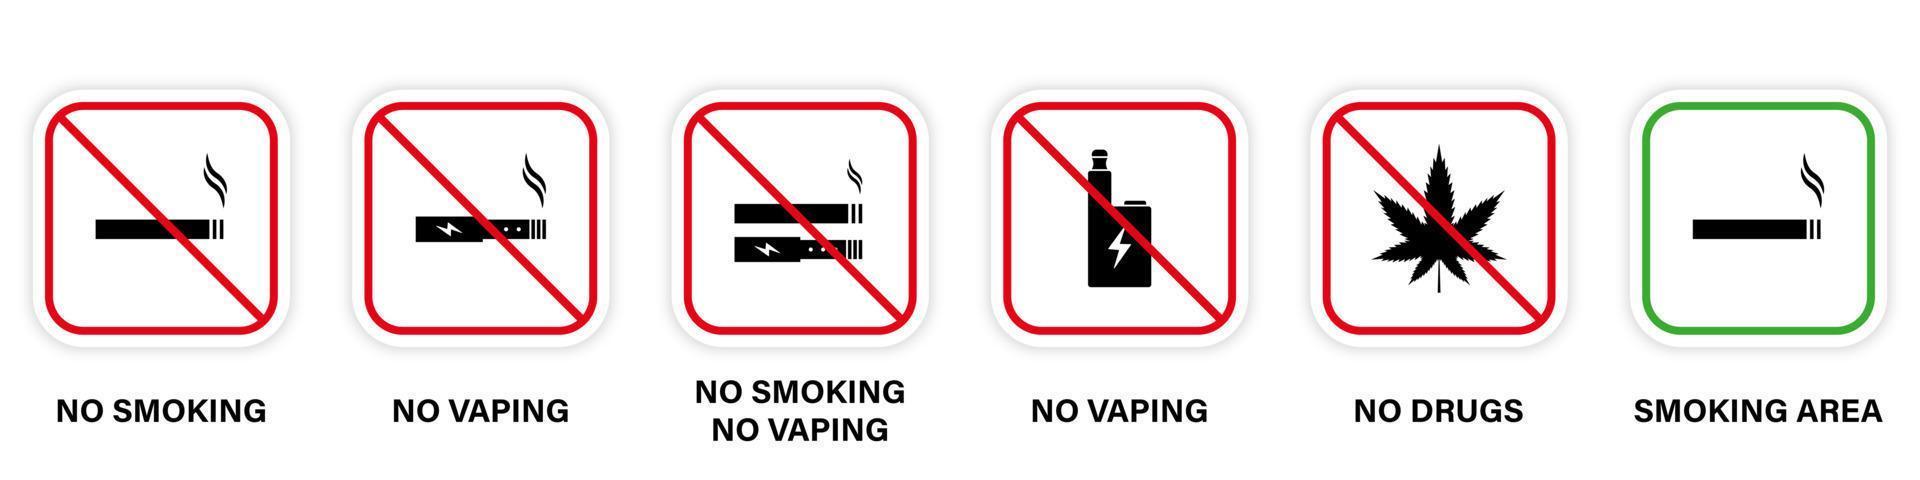 Ban Zone Smoke Marijuana Vape Cigarette Sign. Notice Allow Smoke Area Green Pictogram. Smoke Prohibited Red Stop Symbol. Forbidden Smoking Cannabis Silhouette Icon Set. Isolated Vector Illustration.